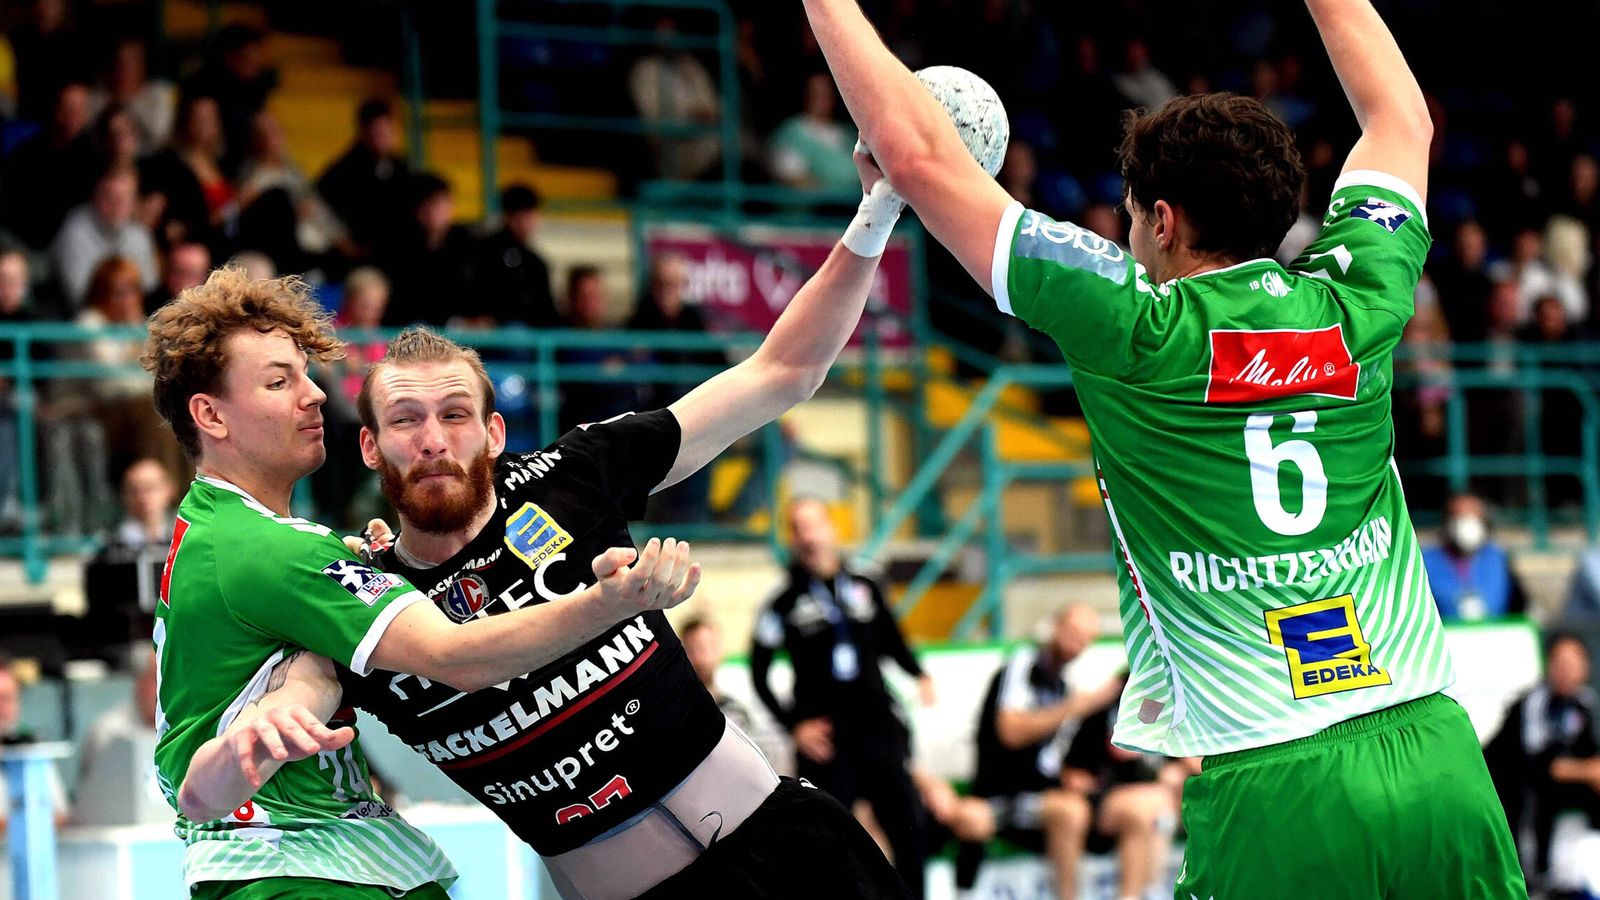 Handball Spiel in Erlangen kurzfristig abgesagt Handball News Sky Sport